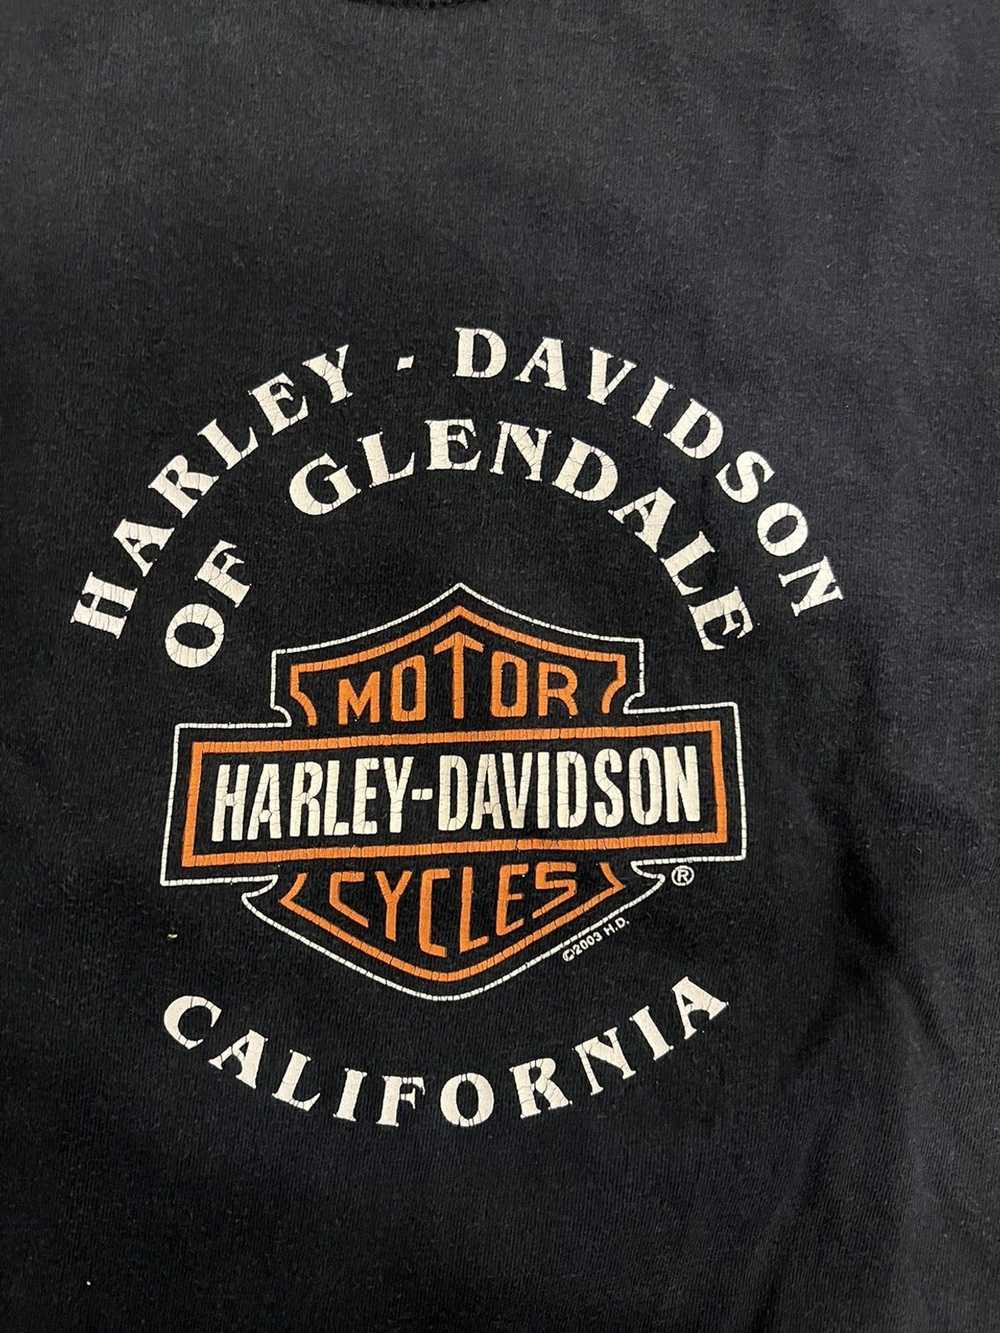 Harley Davidson Harley Davidson Glendale t shirt - image 2